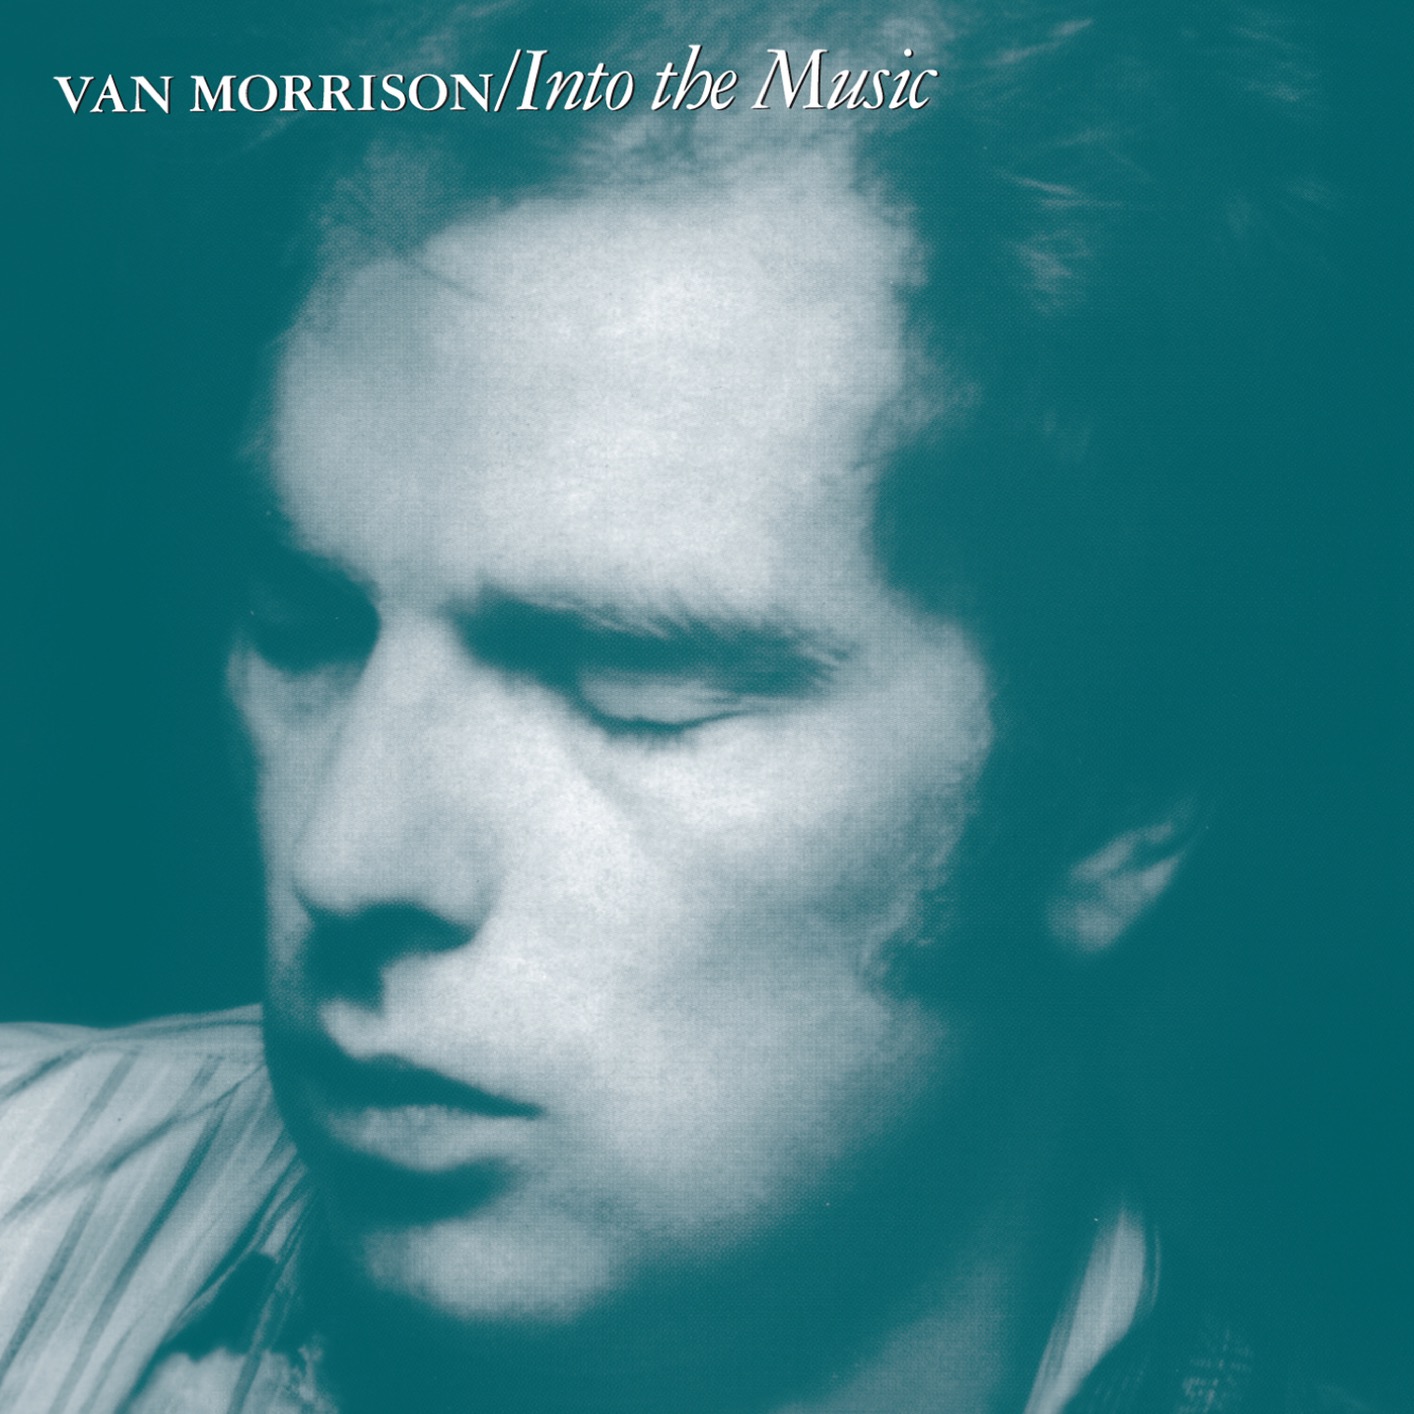 Van Morrison - Into the Music (Remastered) (1983/2020) [FLAC 24bit/96kHz]